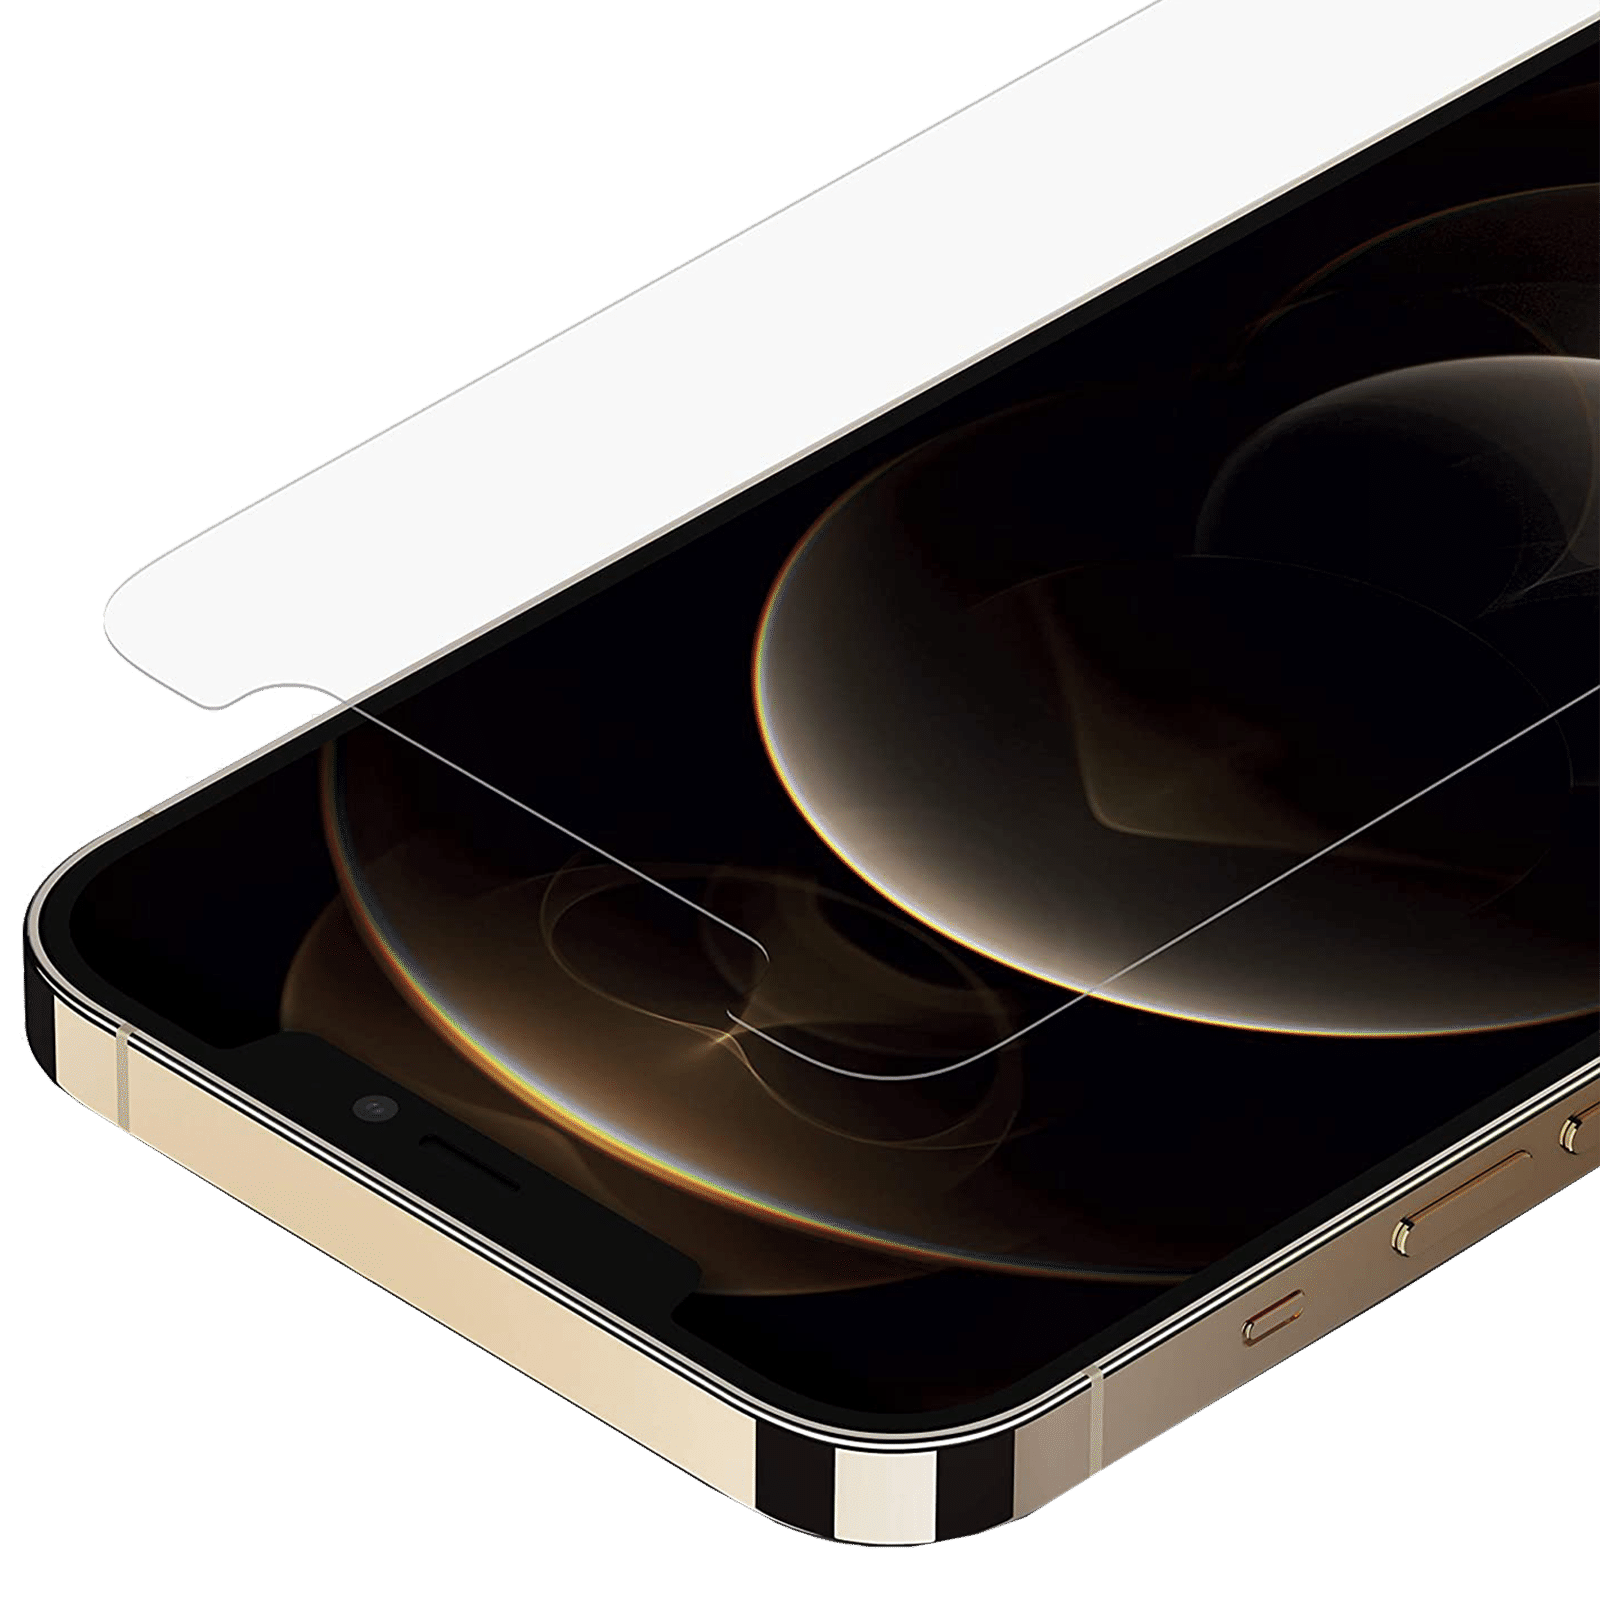 Belkin UltraGlass Screen Protector for iPhone 12 Pro Max